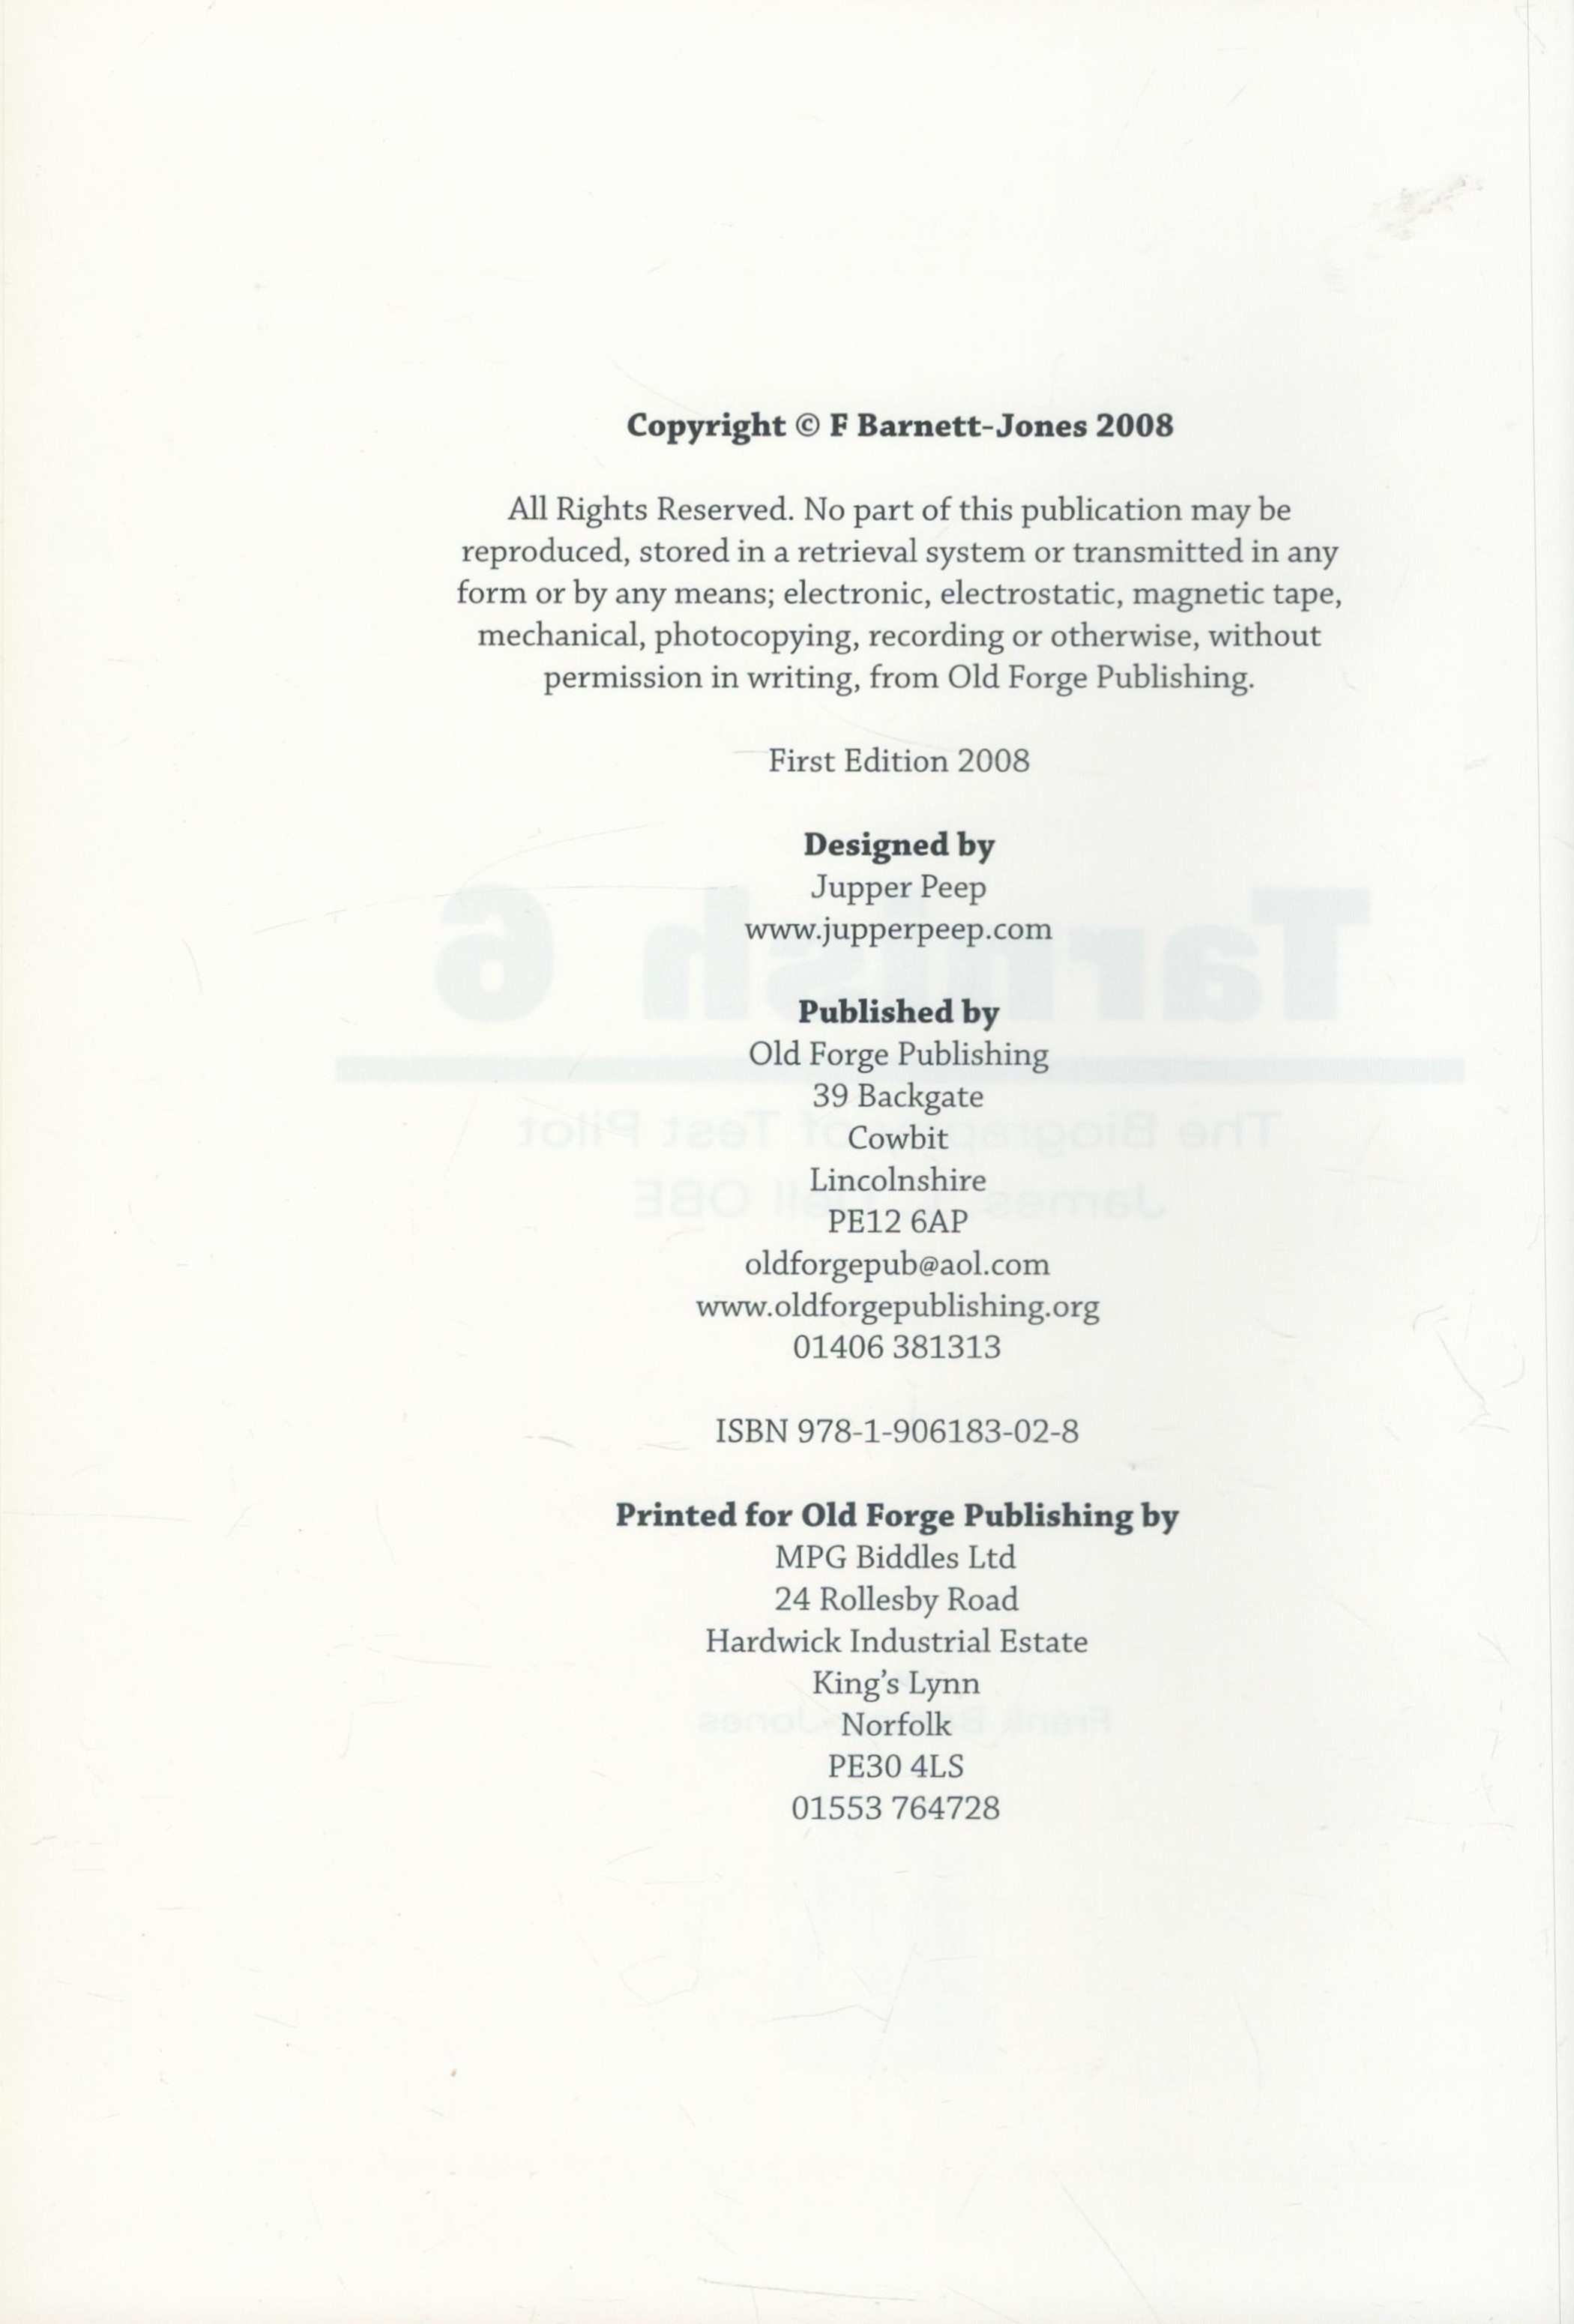 Tarnish 6 - The Biography of Test Pilot Jimmy Dell by Frank Barnett-Jones 2008 Hardback Book First - Image 9 of 9